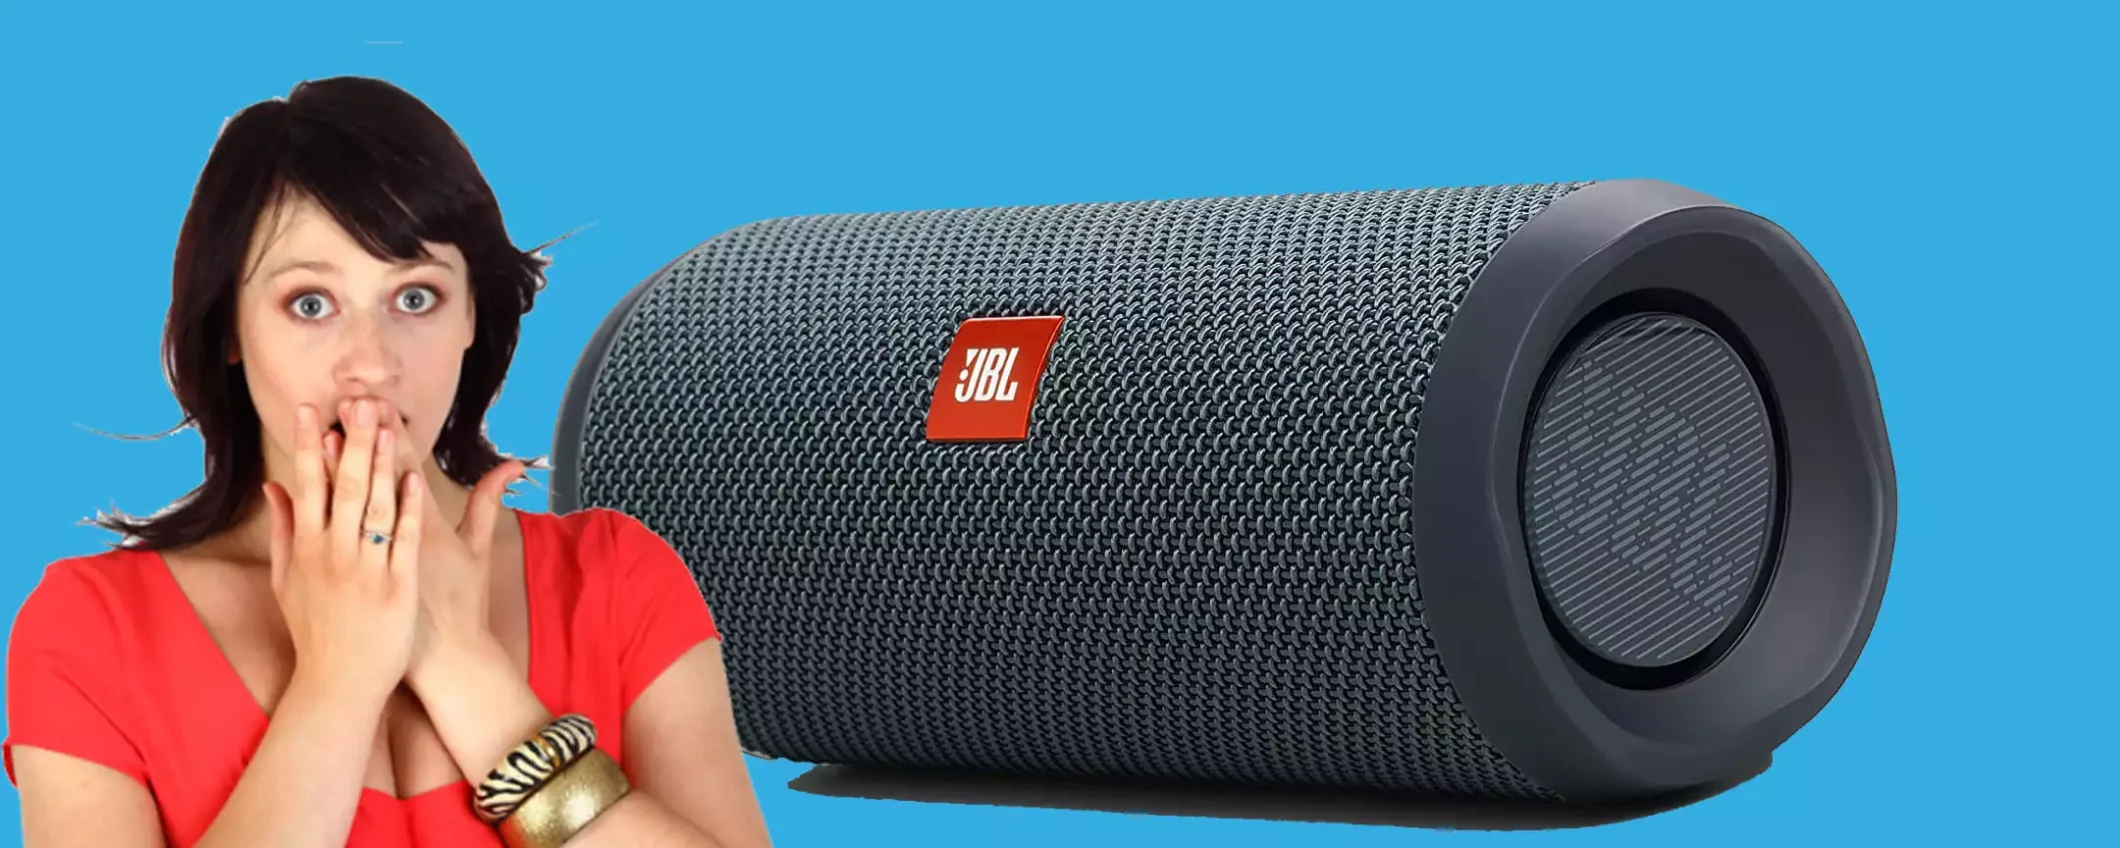 Speaker Bluetooth JBL Flip Essential 2: MINIMO STORICO su Amazon a soli 69€